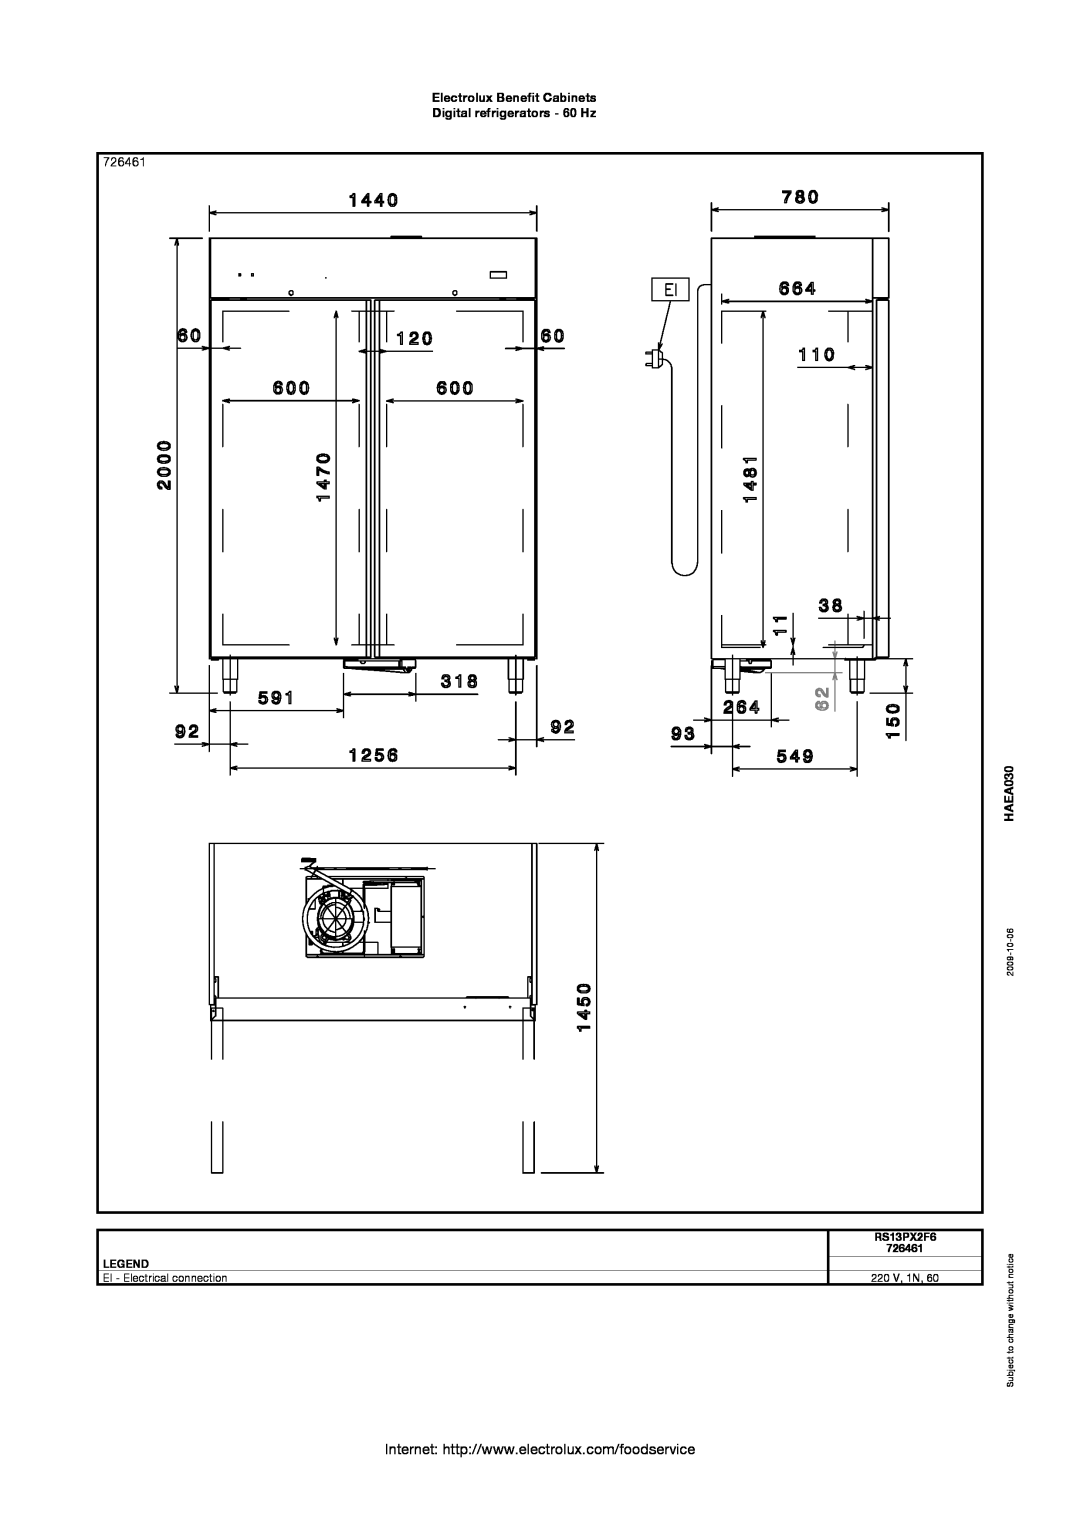 Electrolux 726453 manual 726461, Electrolux Benefit Cabinets Digital refrigerators - 60 Hz, HAEA030, RS13PX2F6, 220 V, 1N 